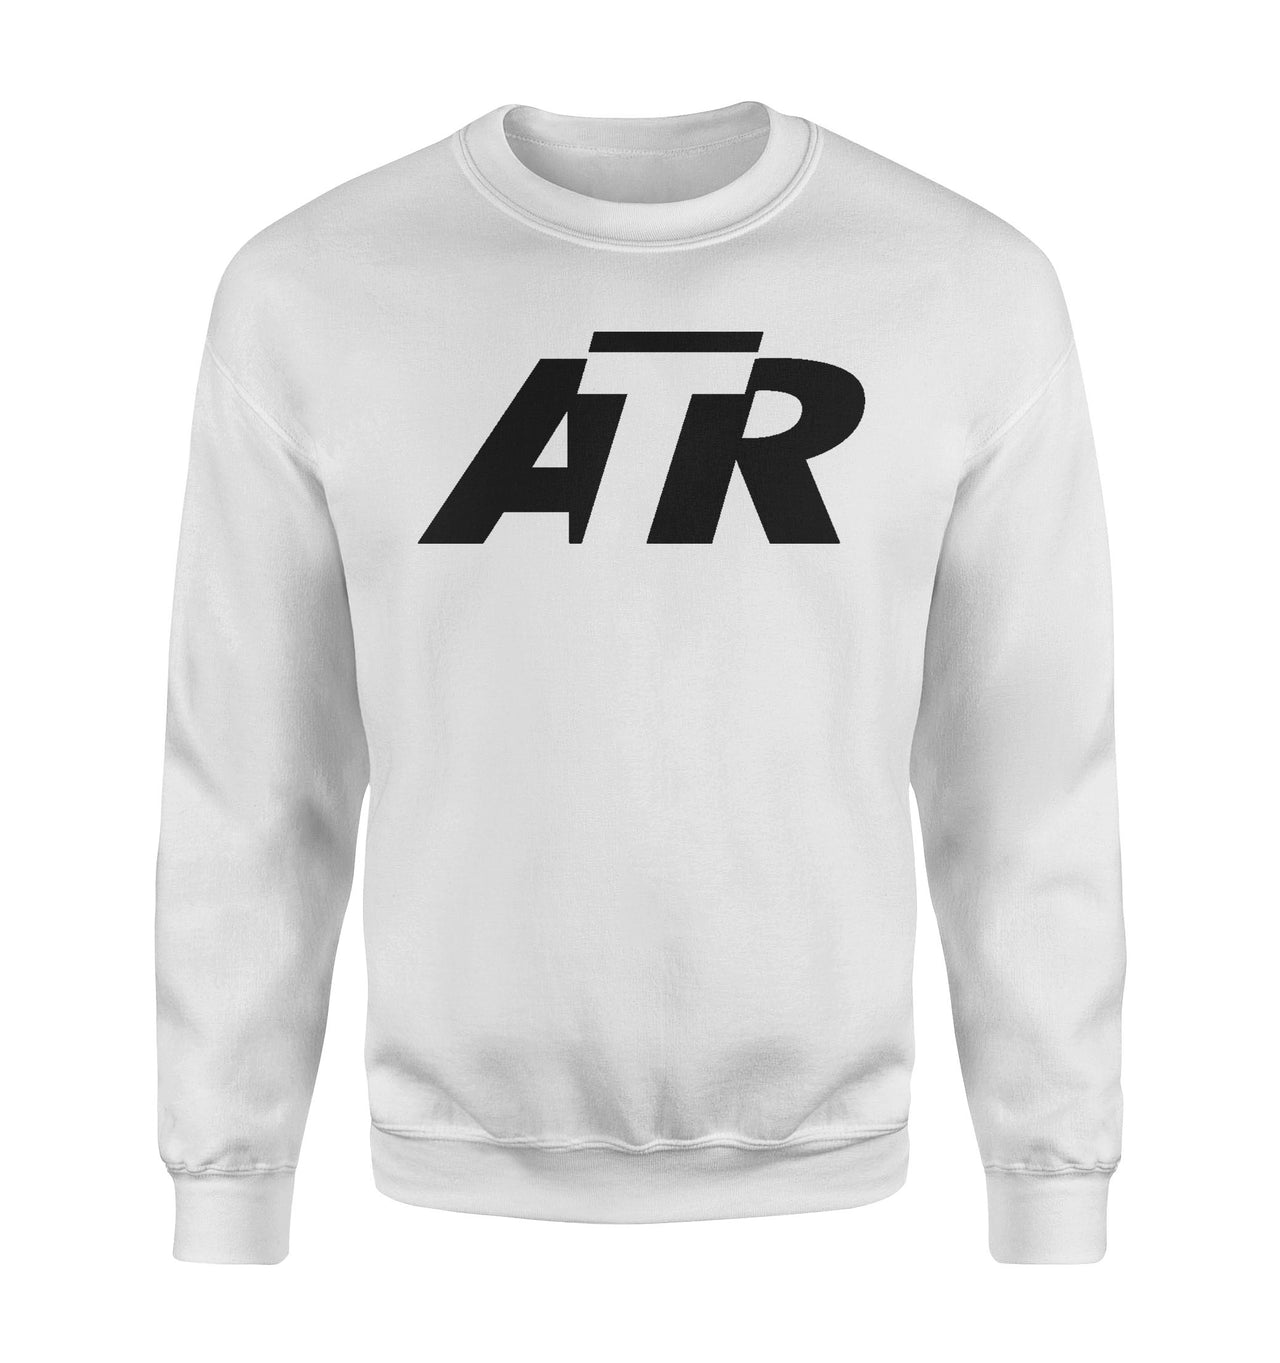 ATR & Text Designed Sweatshirts